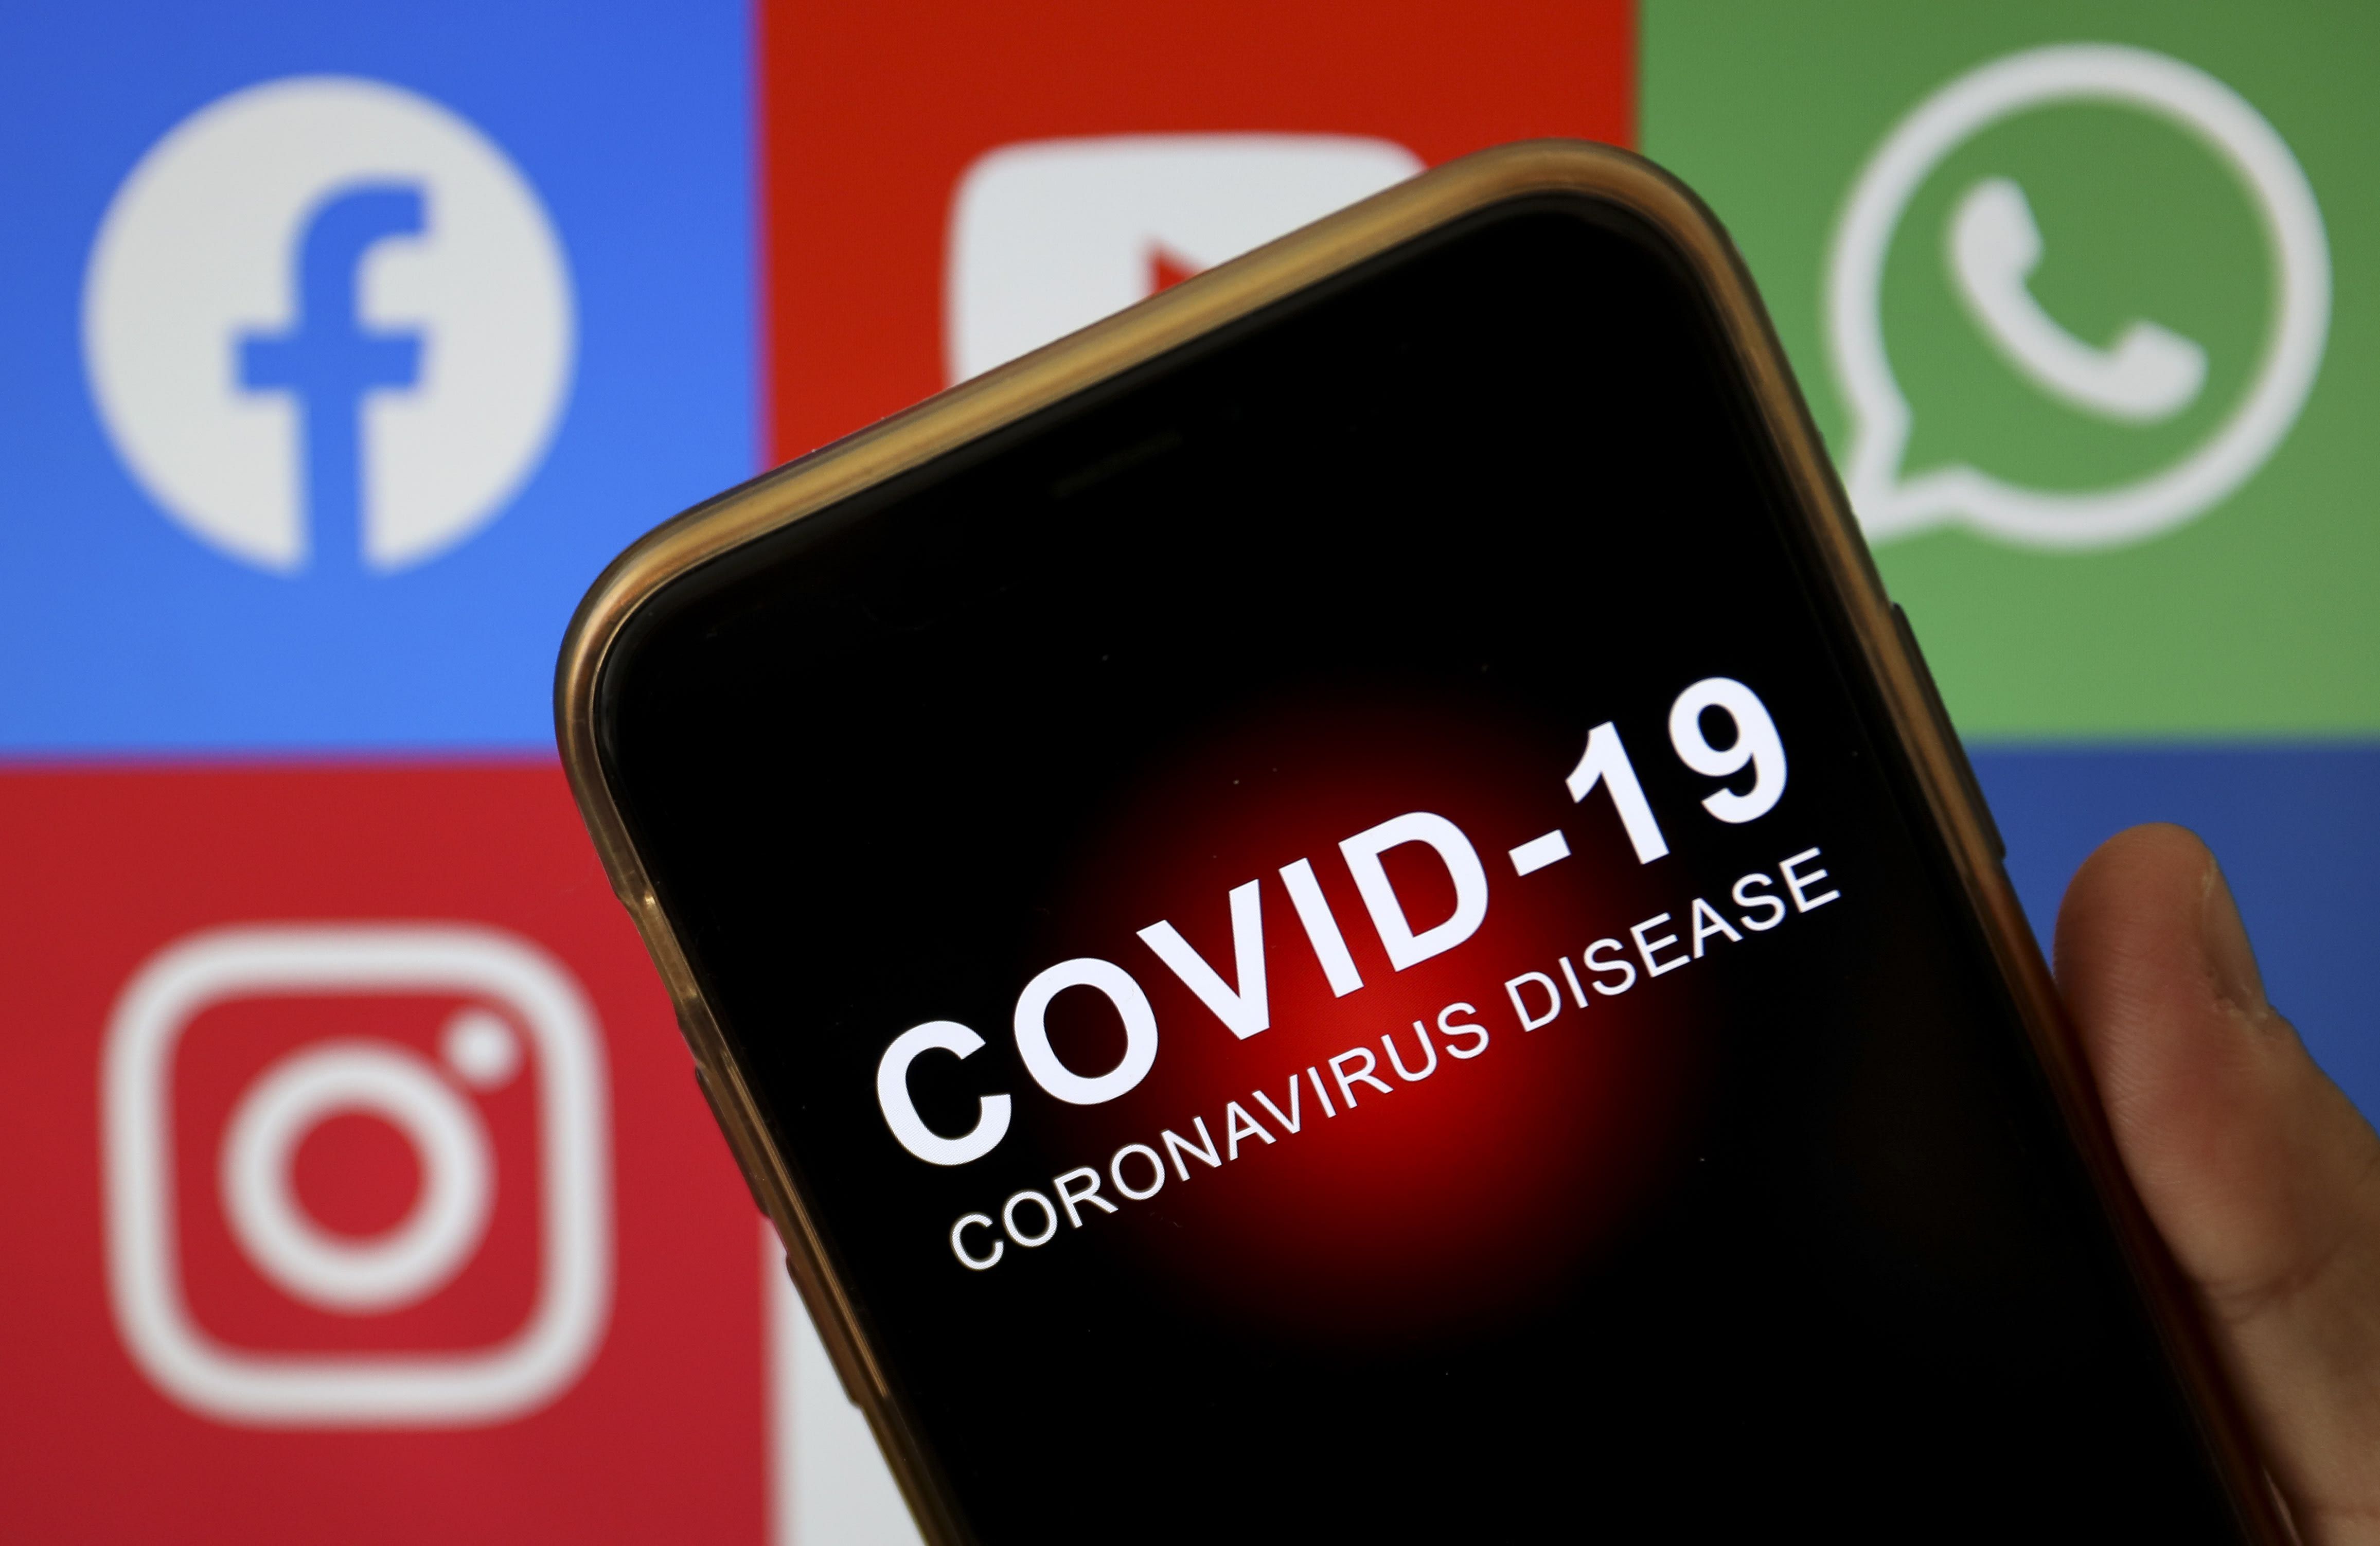 Social media usage linked to belief in coronavirus conspiracy theories